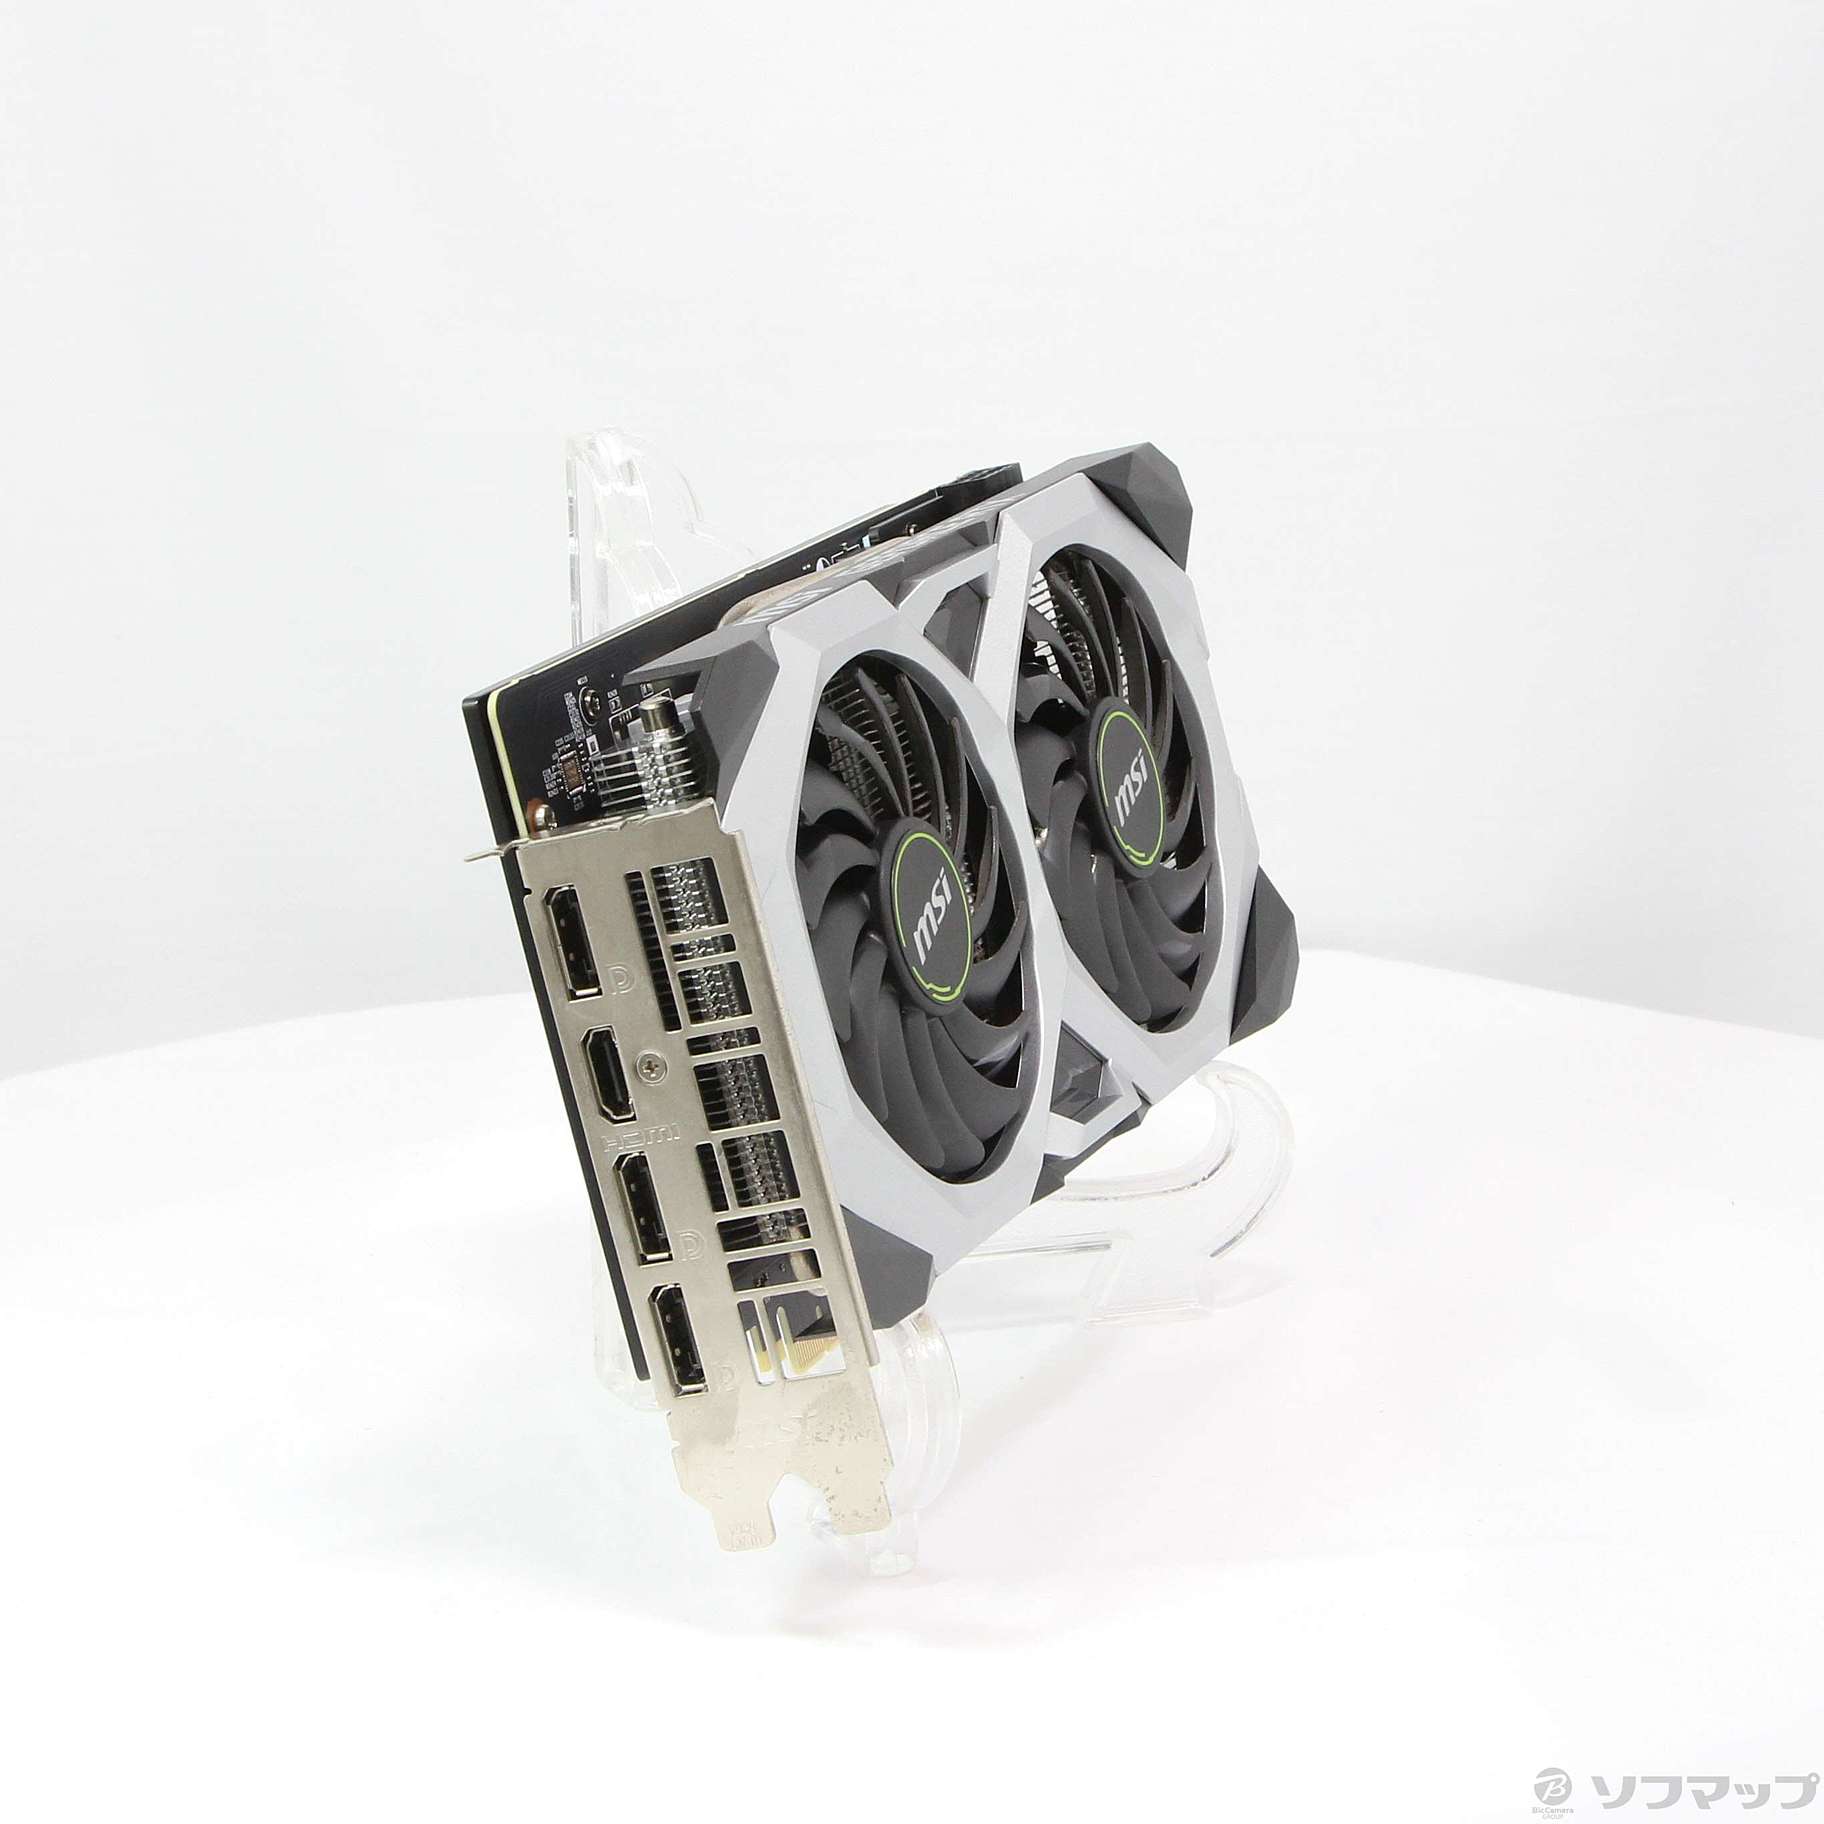 MSI GeForce RTX 2060 VENTUS 6G OC